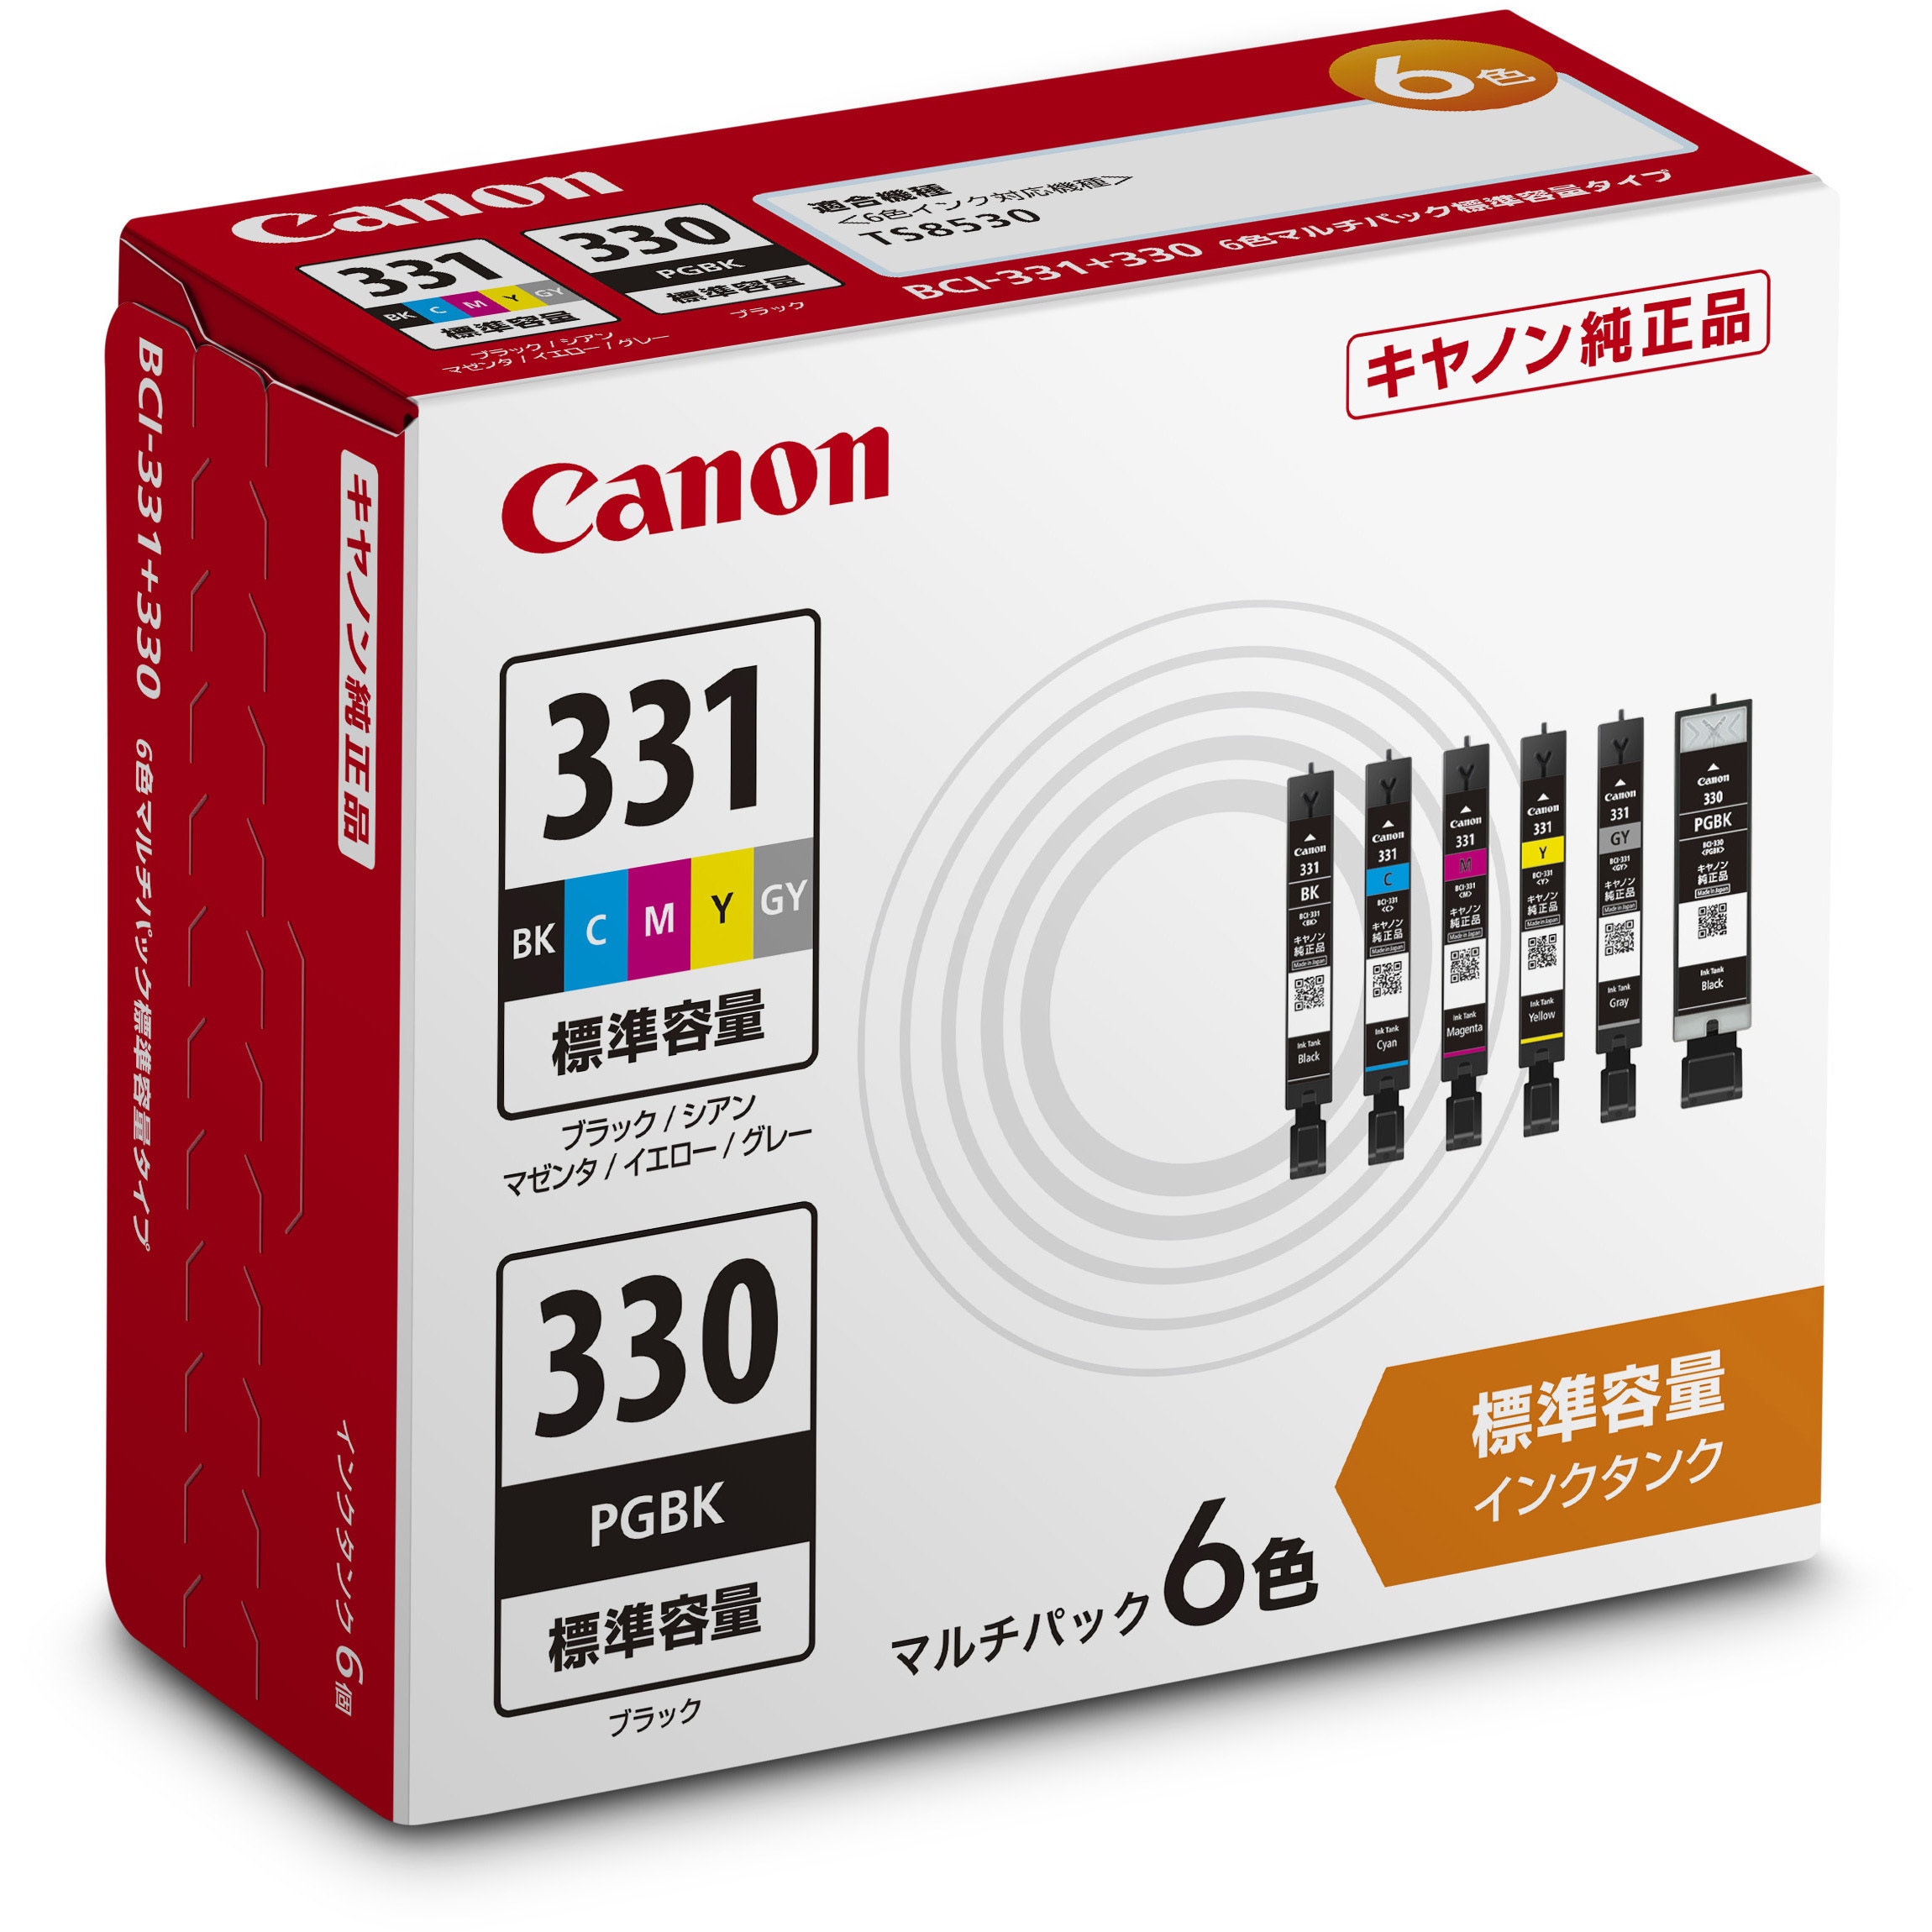 CB5223 K Canon キヤノン純正品 インクカートリッジ 26個セット BCI-6C,BCI-6M,BCI-6Y,BCI-6C,BCI-6G,BCI-6R,BCI-6PM,BCI-6BK